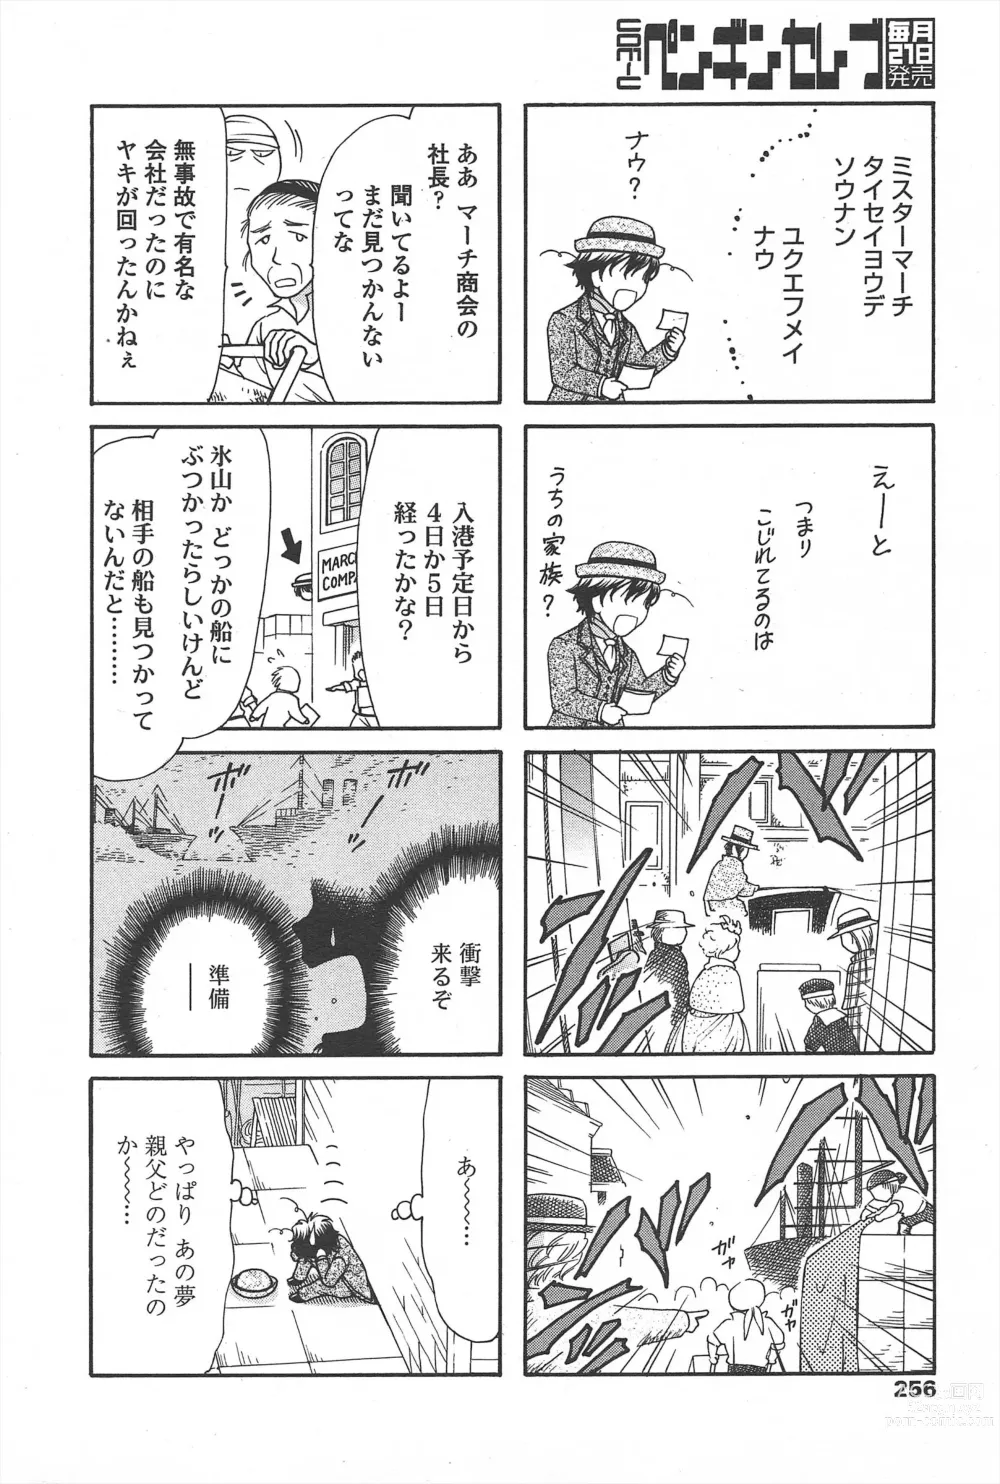 Page 258 of manga COMIC Penguin Celeb 2011-02